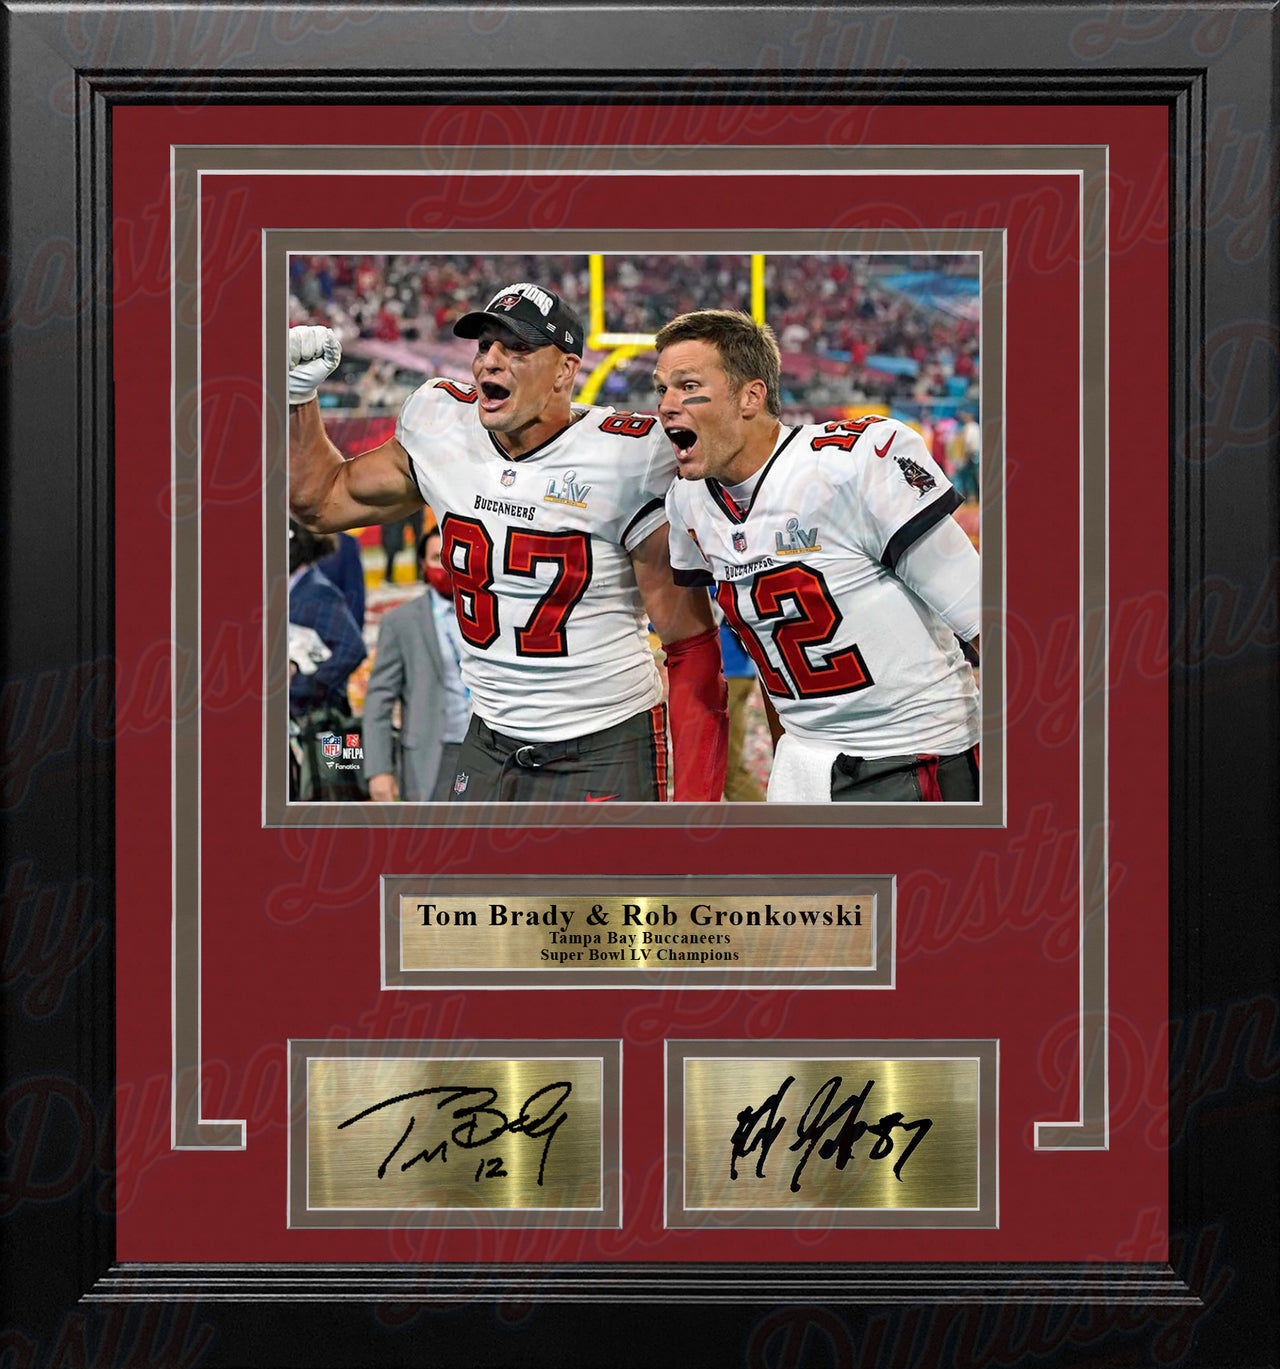 Tom Brady & Rob Gronkowski Super Bowl LV Tampa Bay Buccaneers 8x10 Framed Photo Engraved Autographs - Dynasty Sports & Framing 